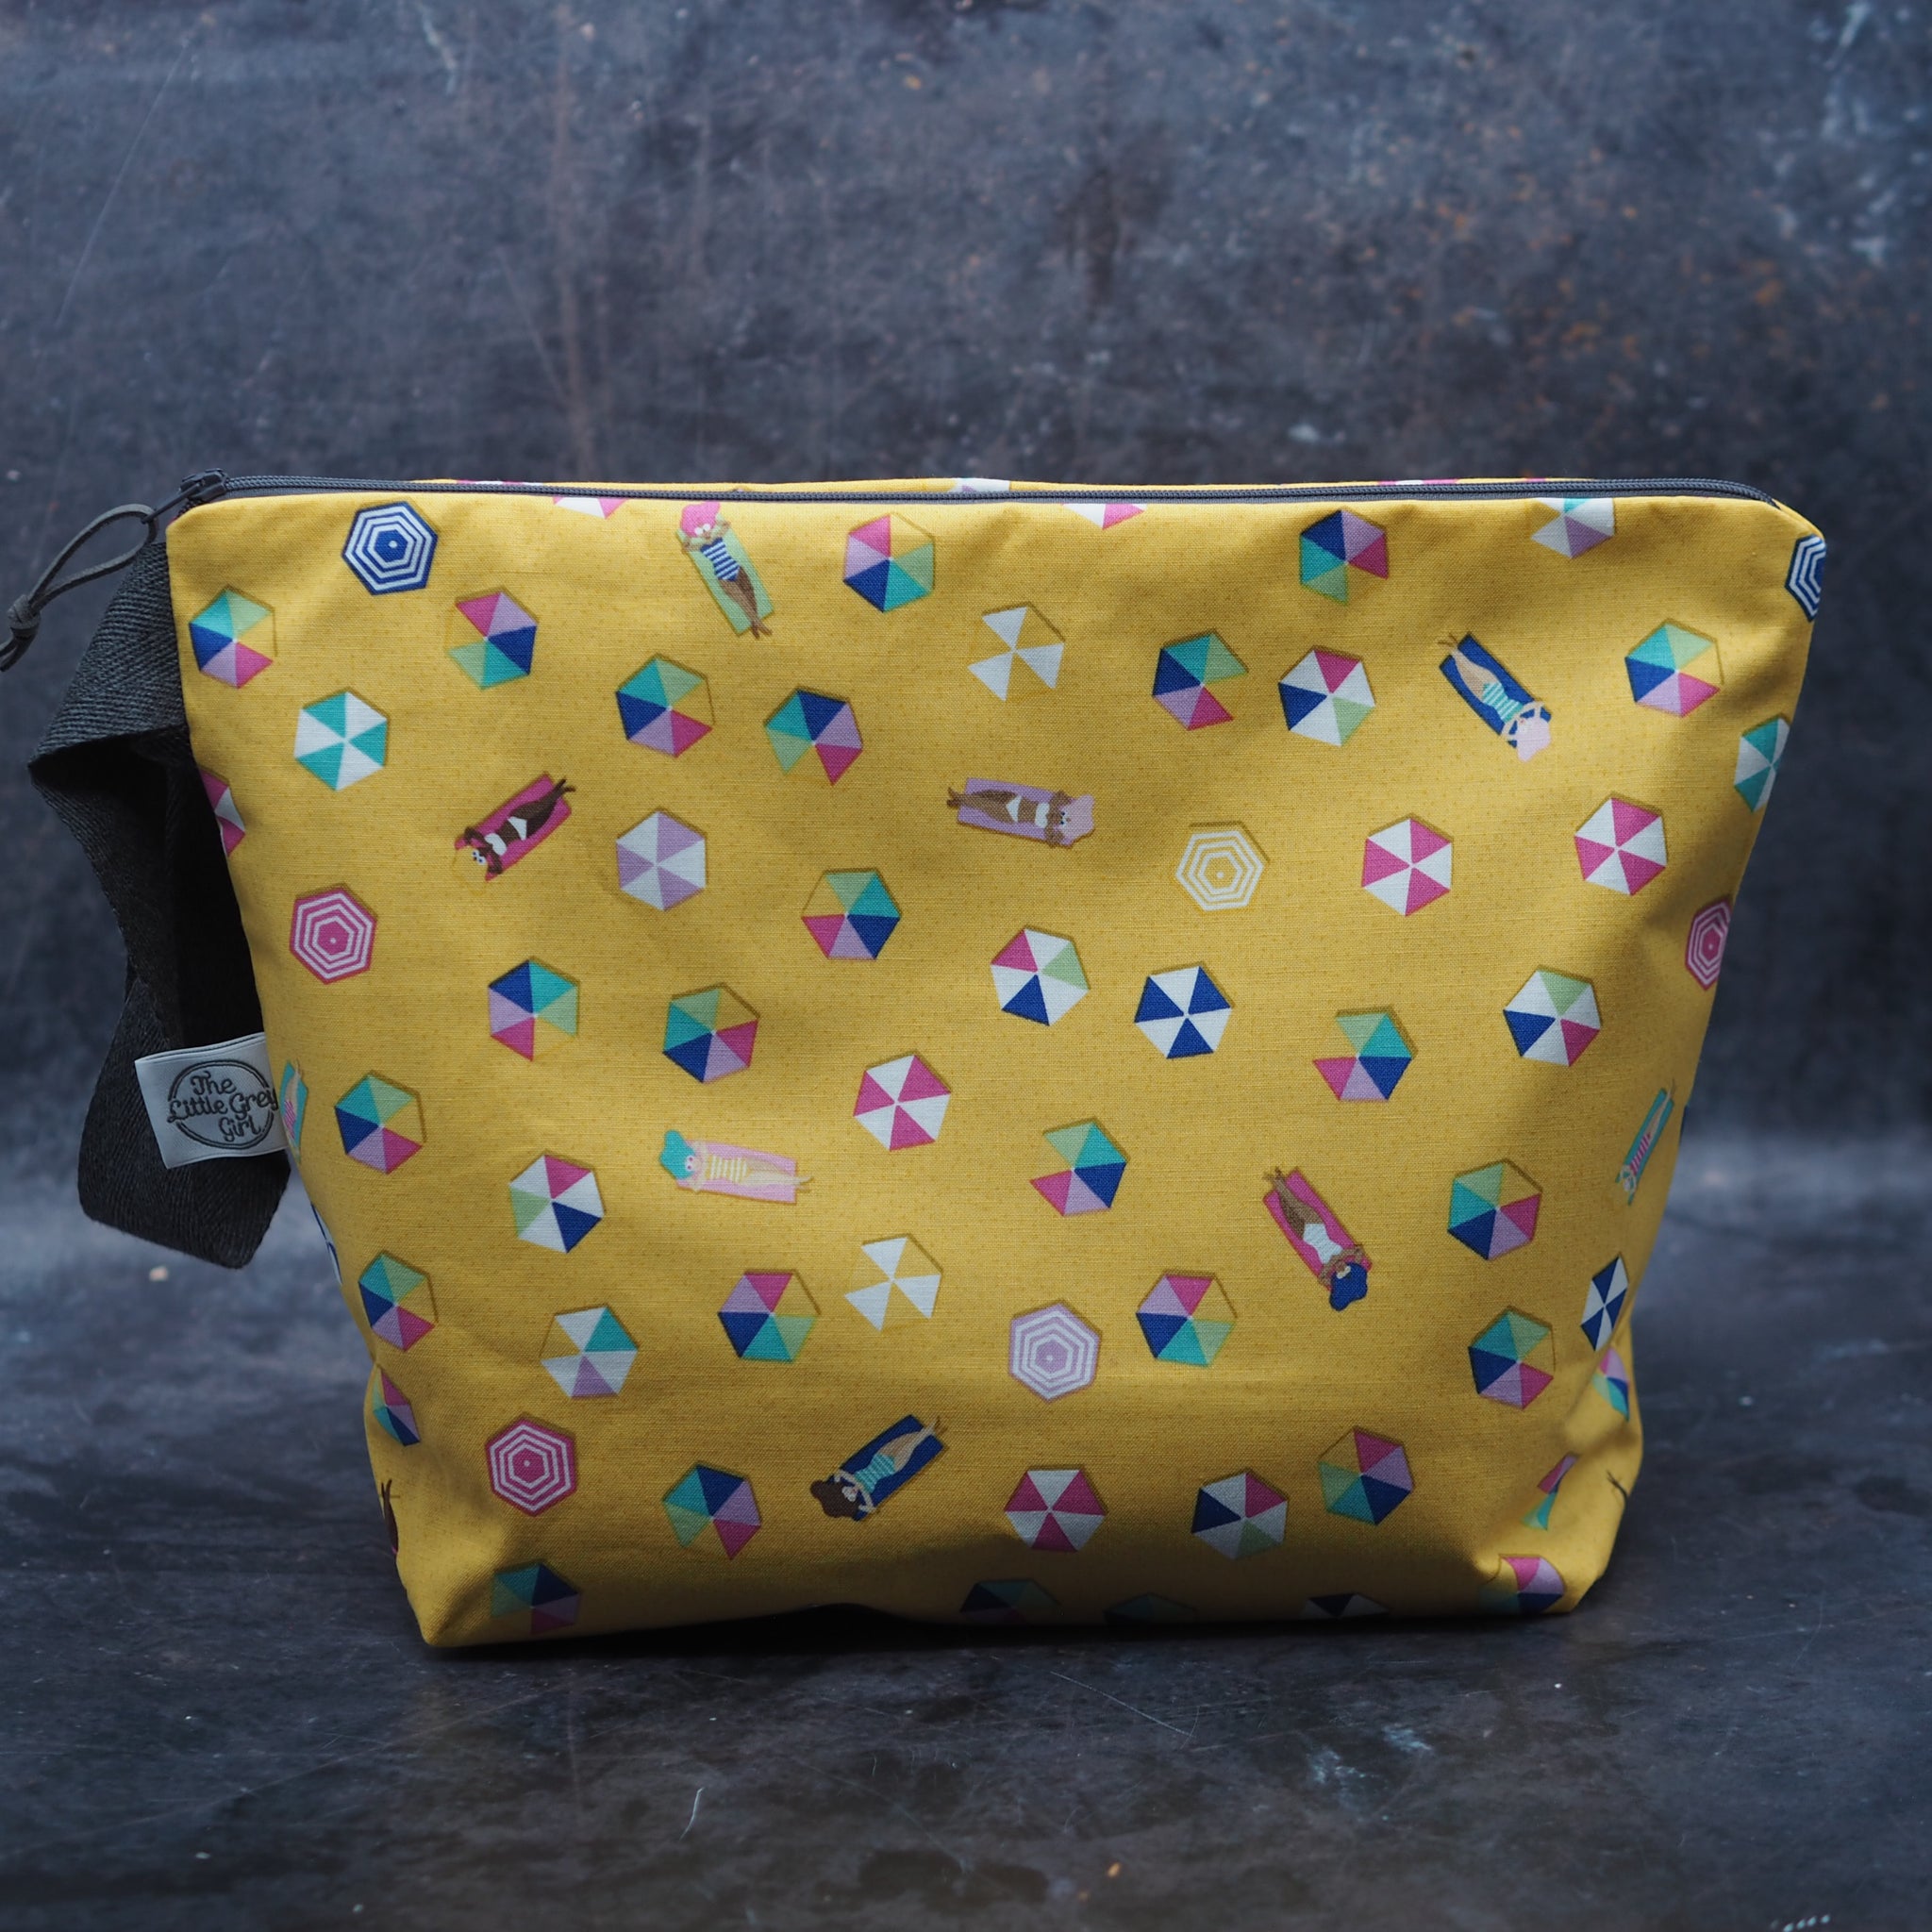 Sunshine Blvd - Handmade Cotton Project Bags